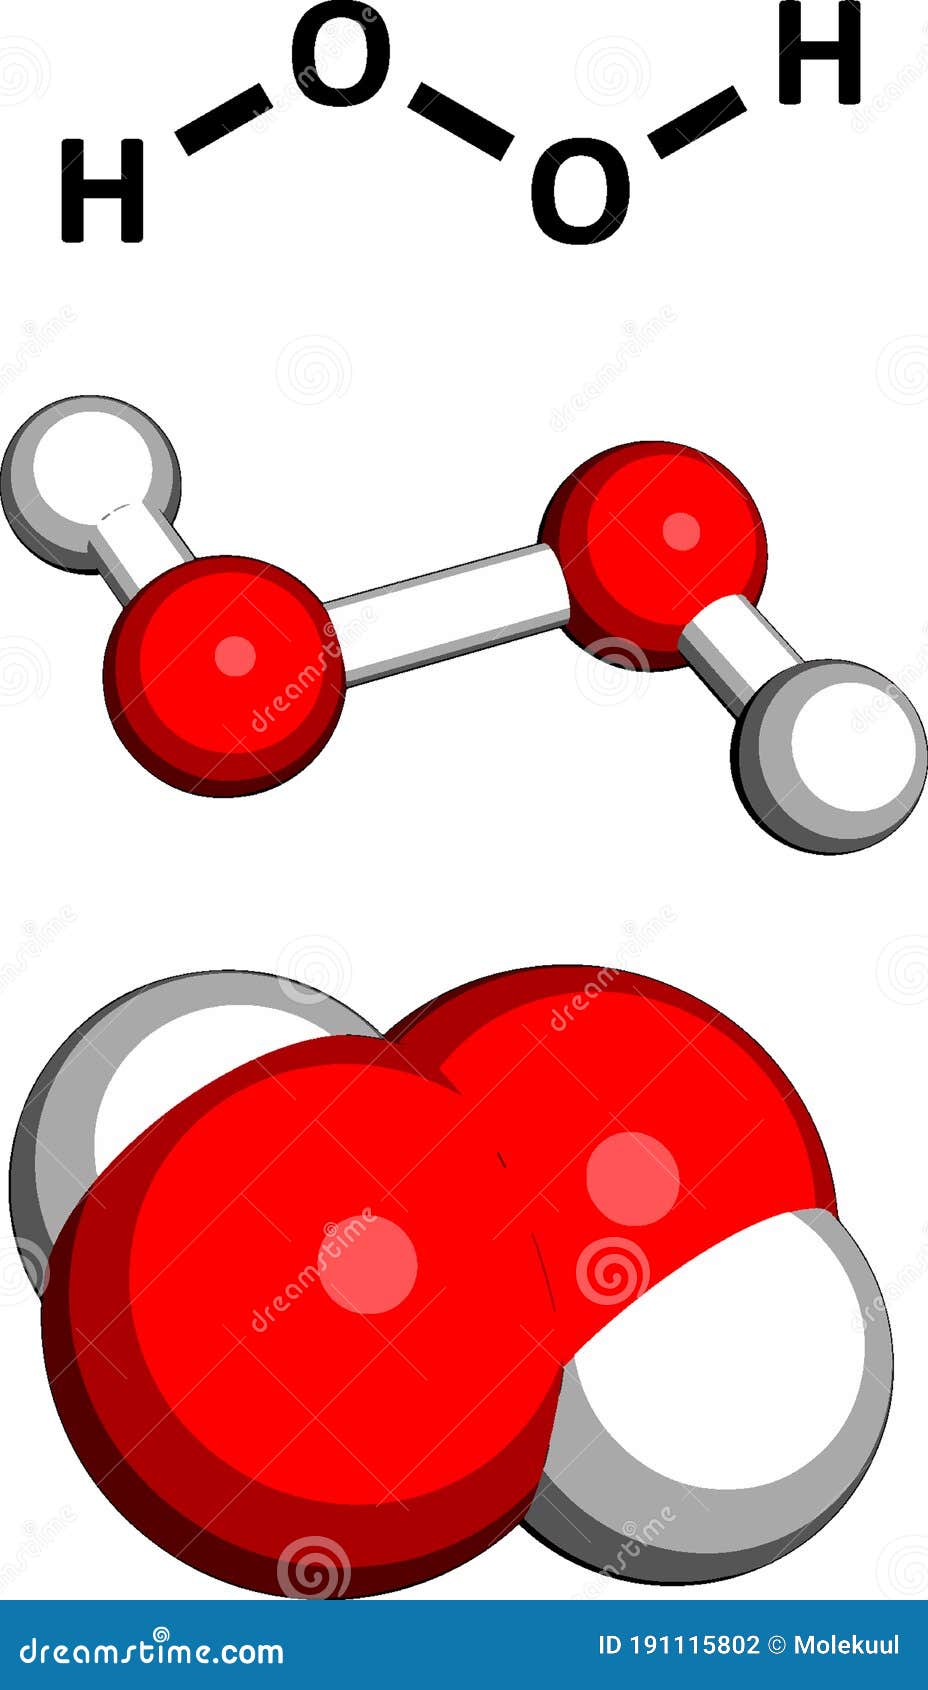 Hydrogen peroxide formula